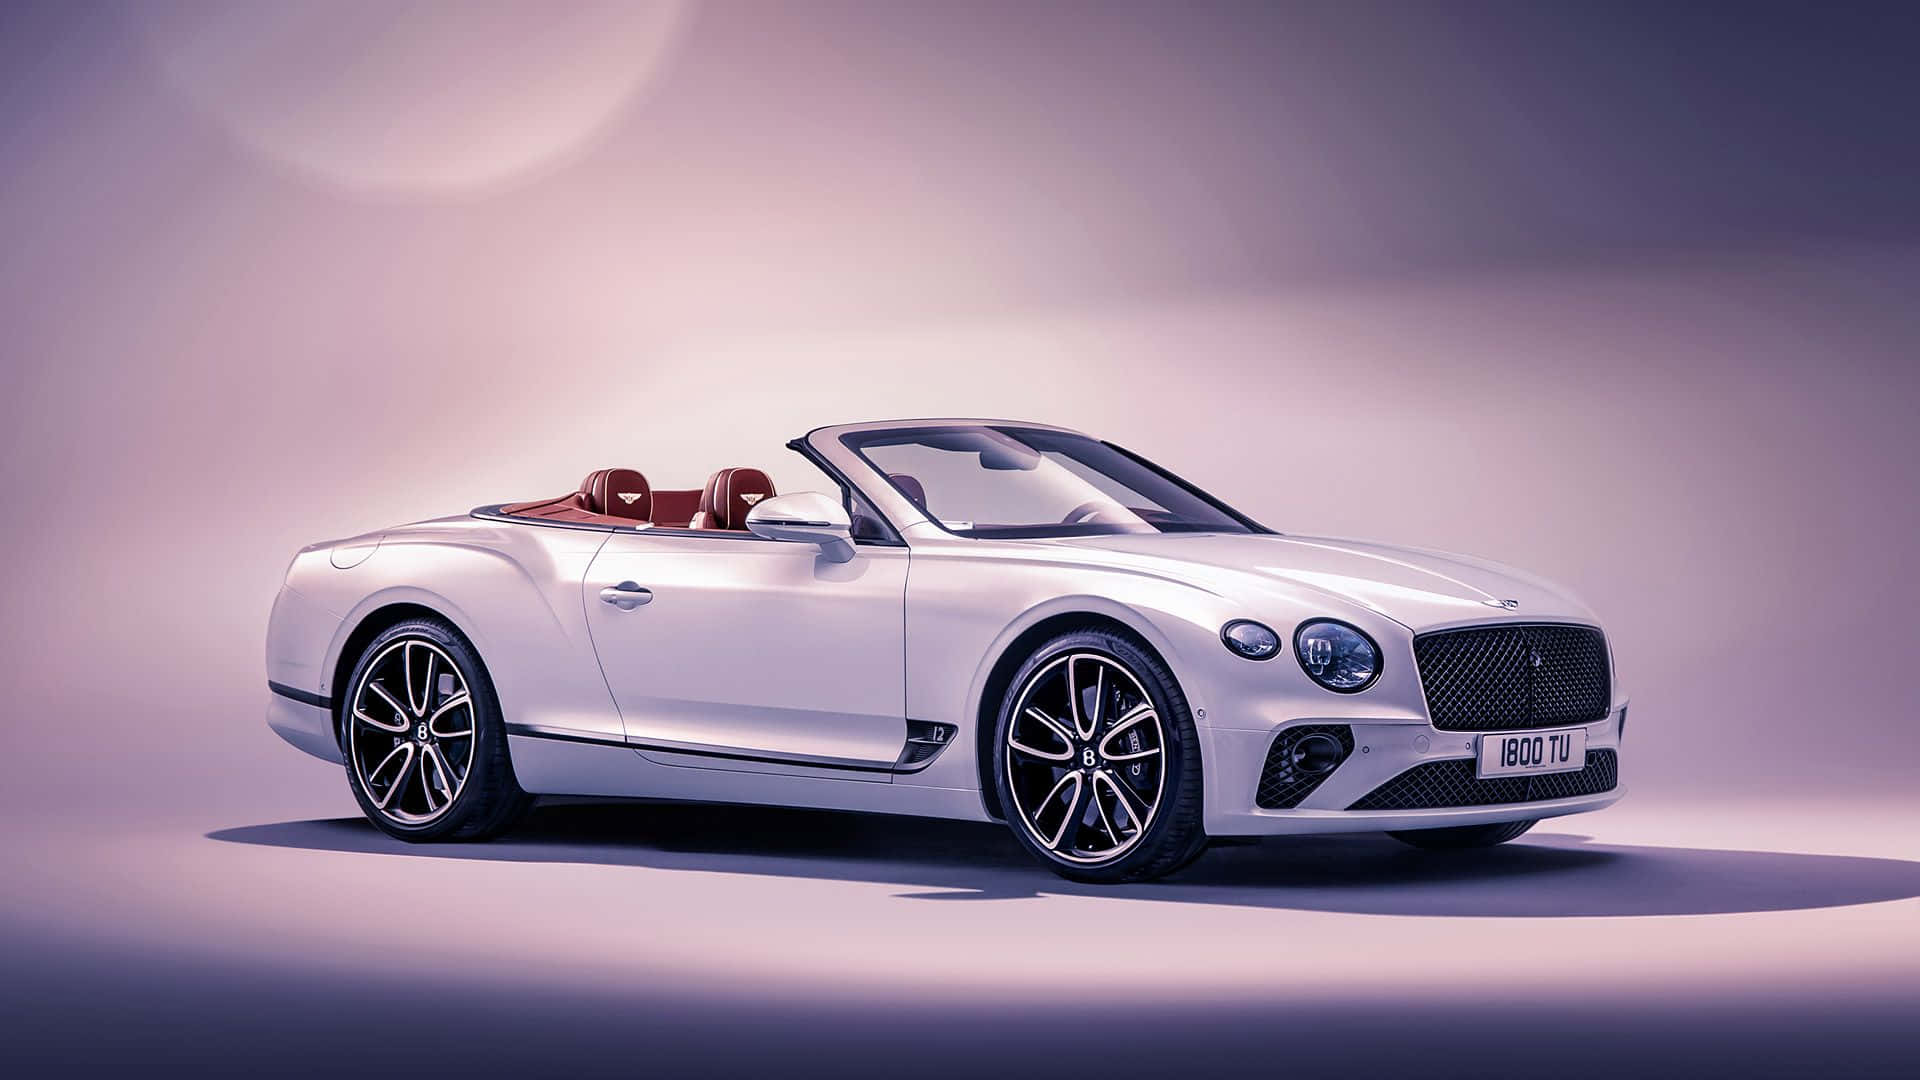 Perfektionin Bewegung: Der Bentley Exp Speed 8